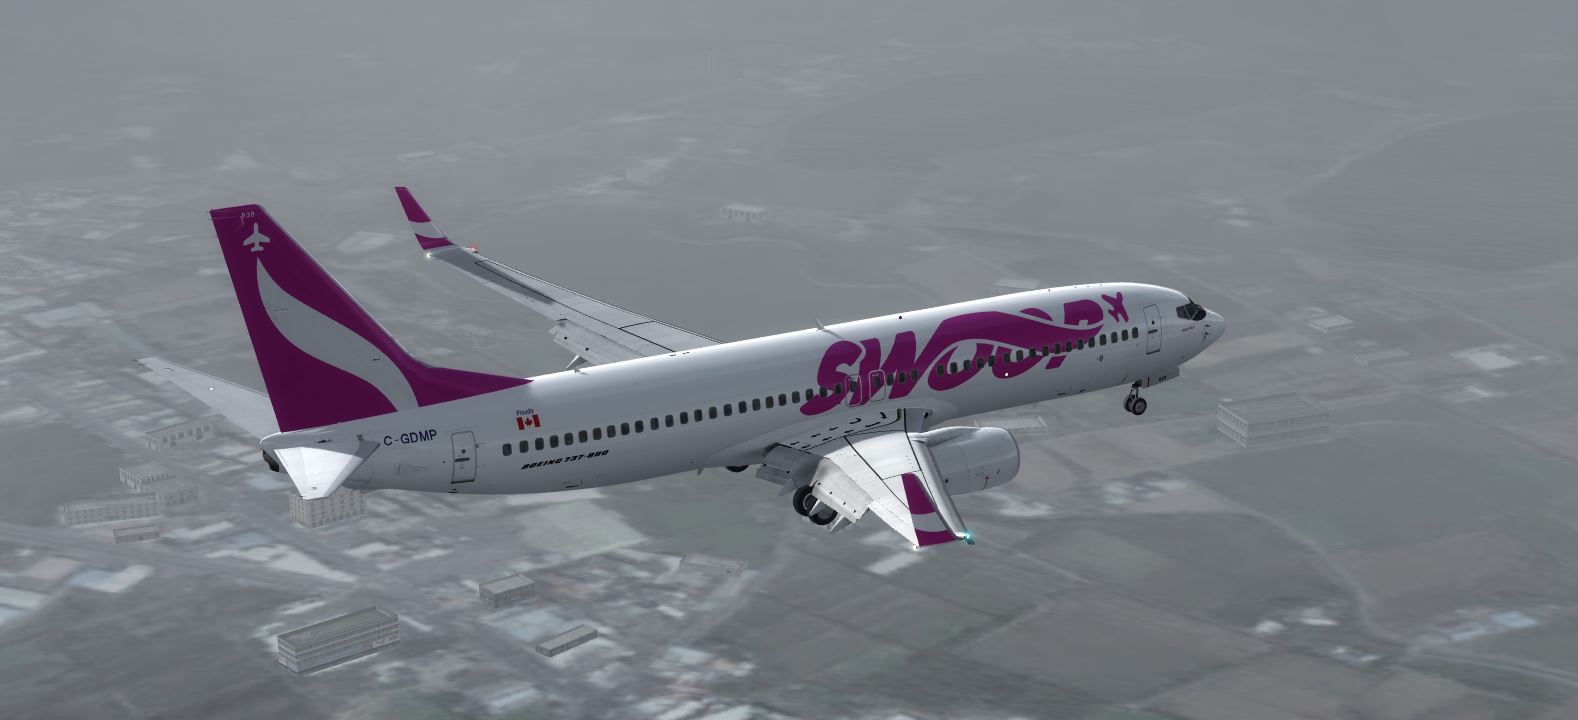 B737-800 Swoop Airlines-4491 